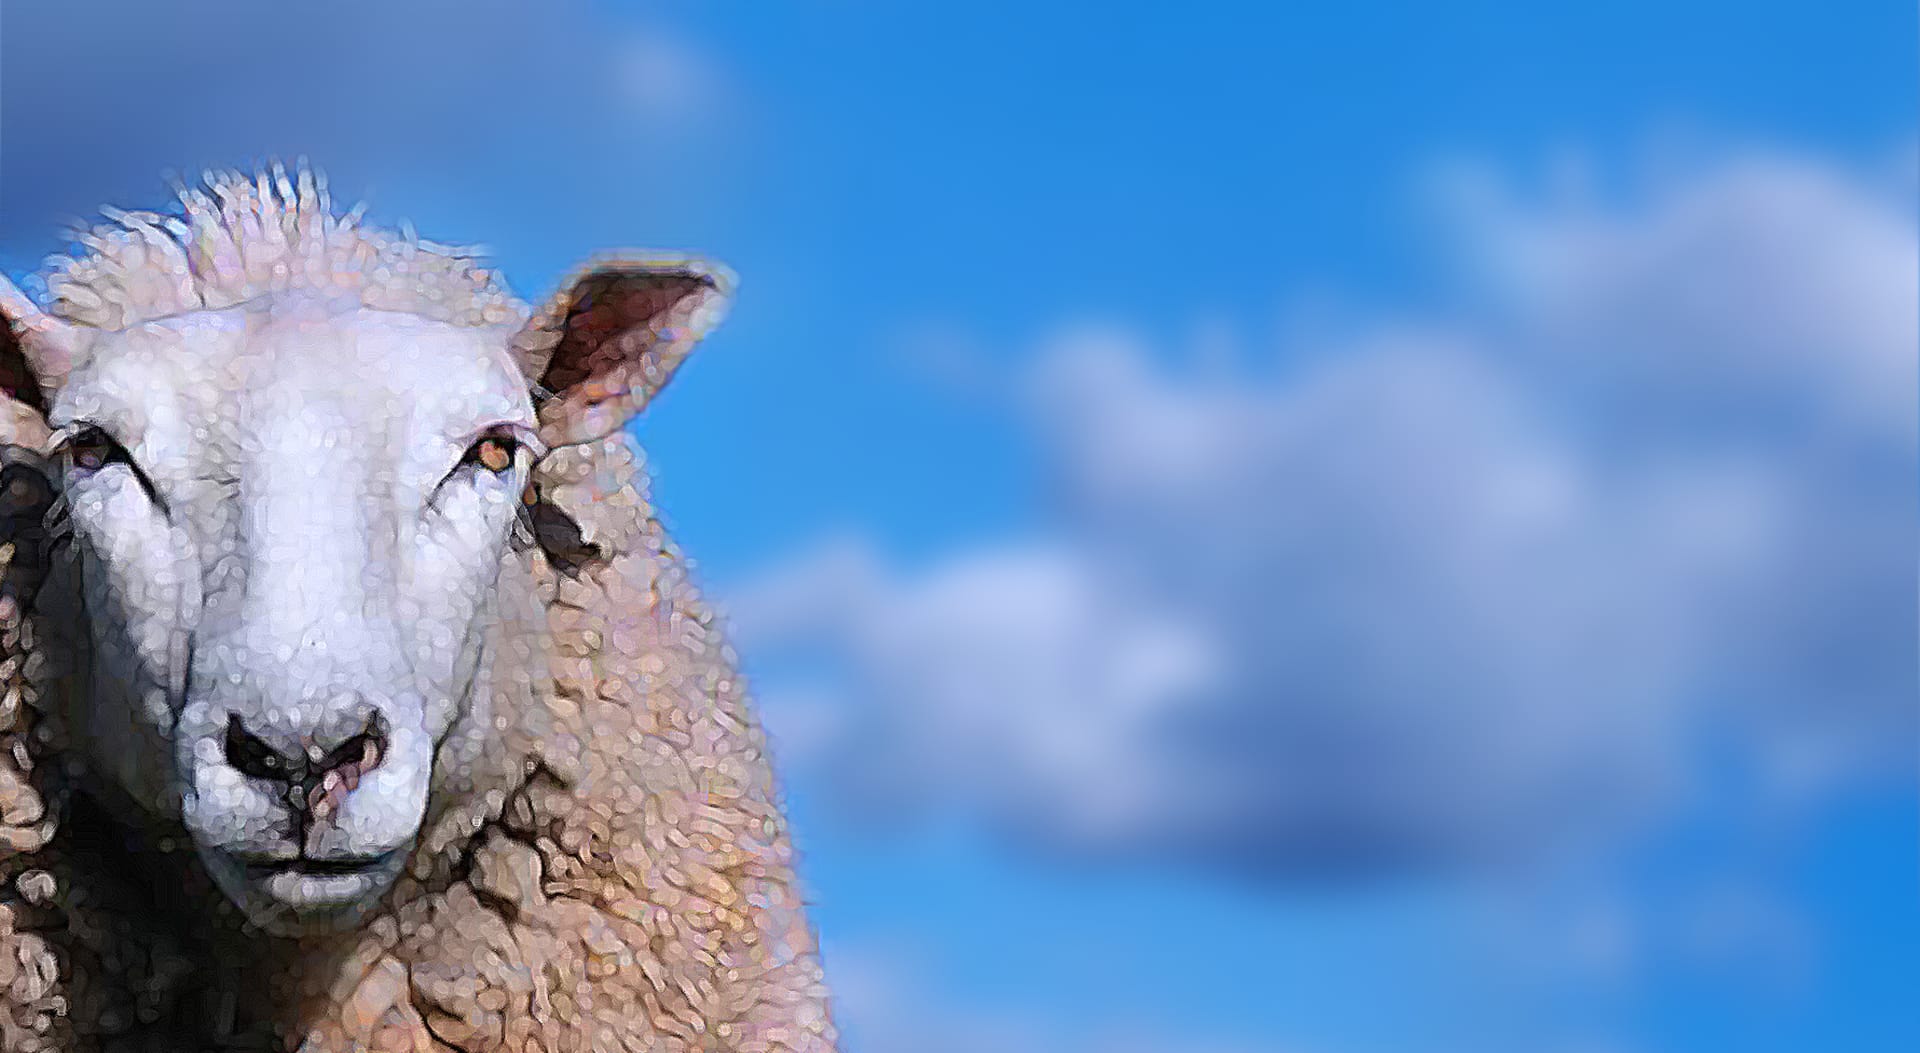 sheep agains blue sky